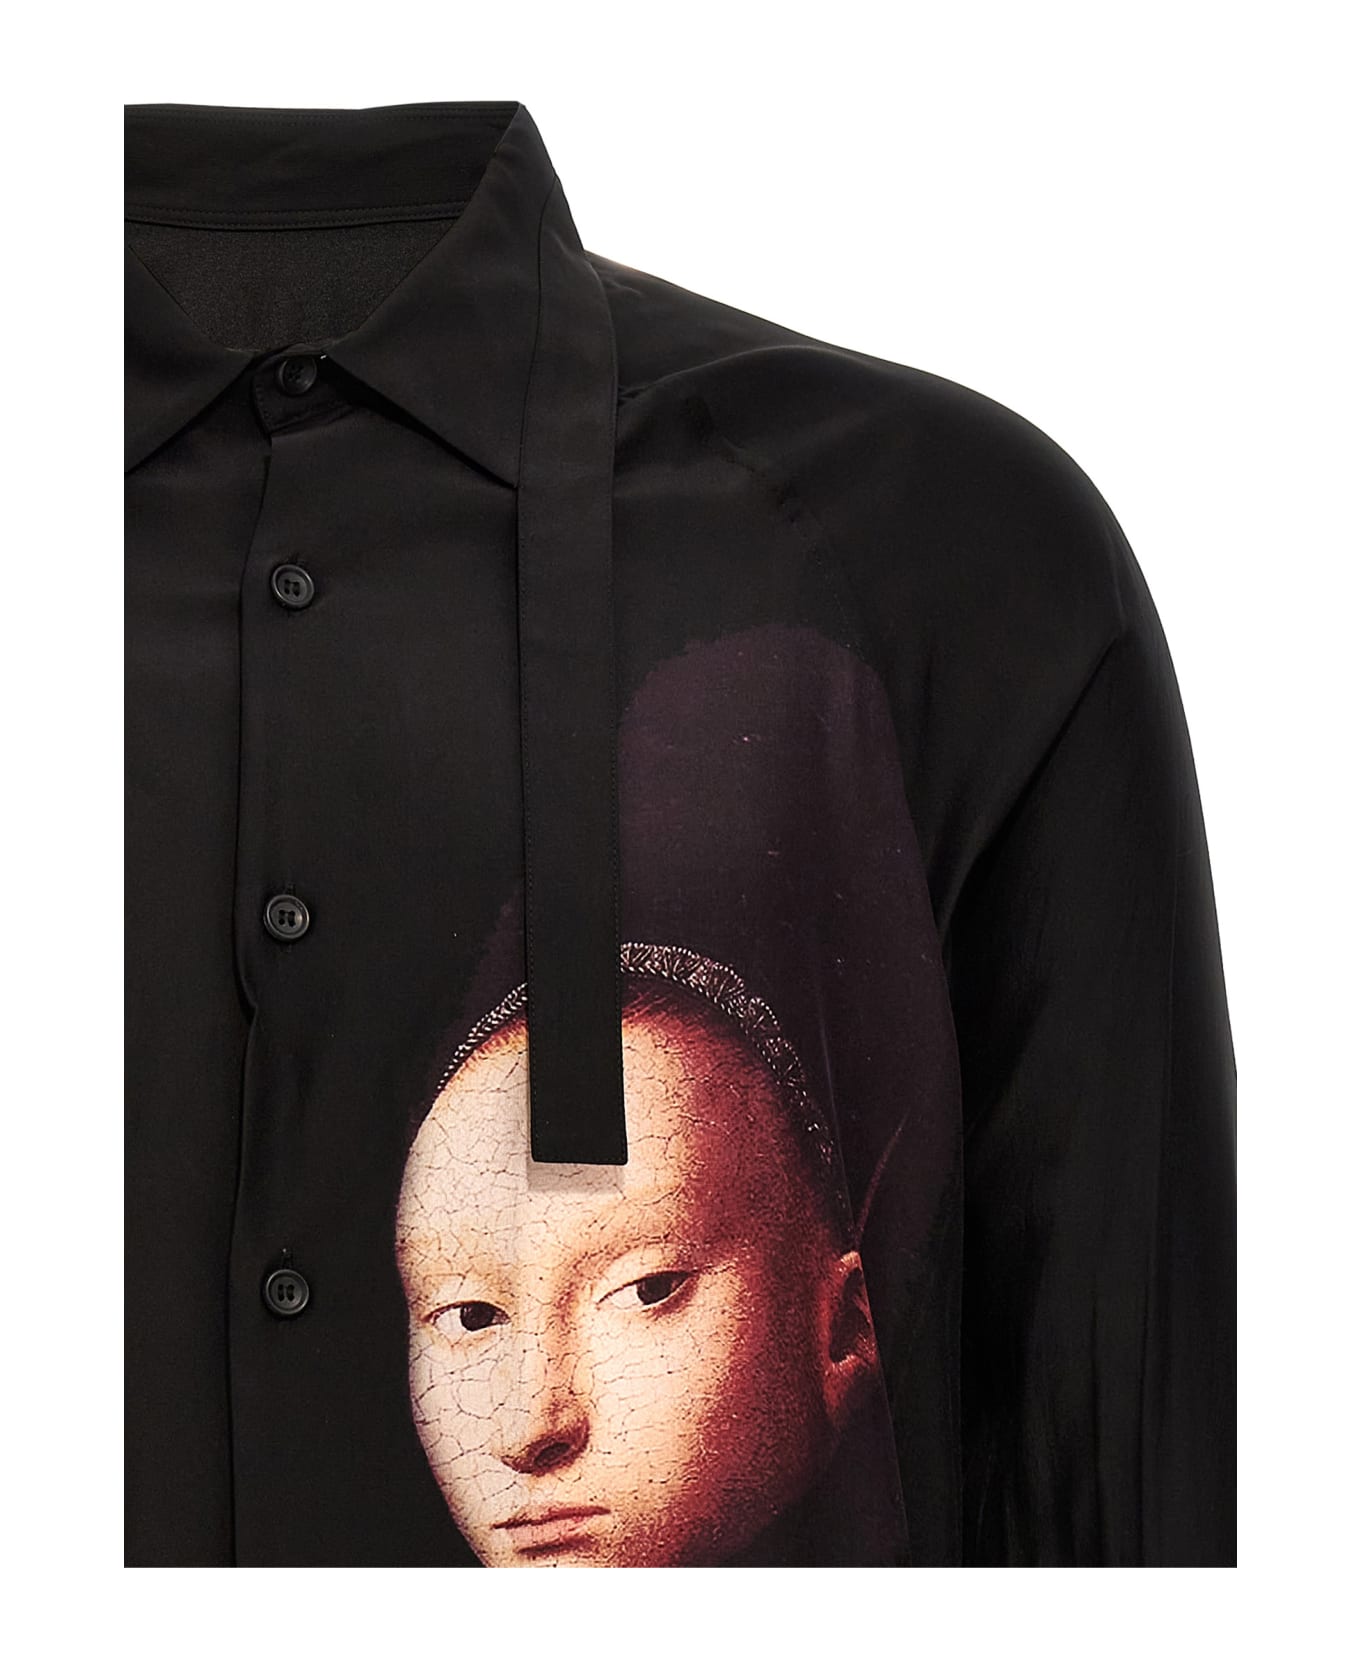 Yohji Yamamoto 'm-young Girl' Shirt - Black  